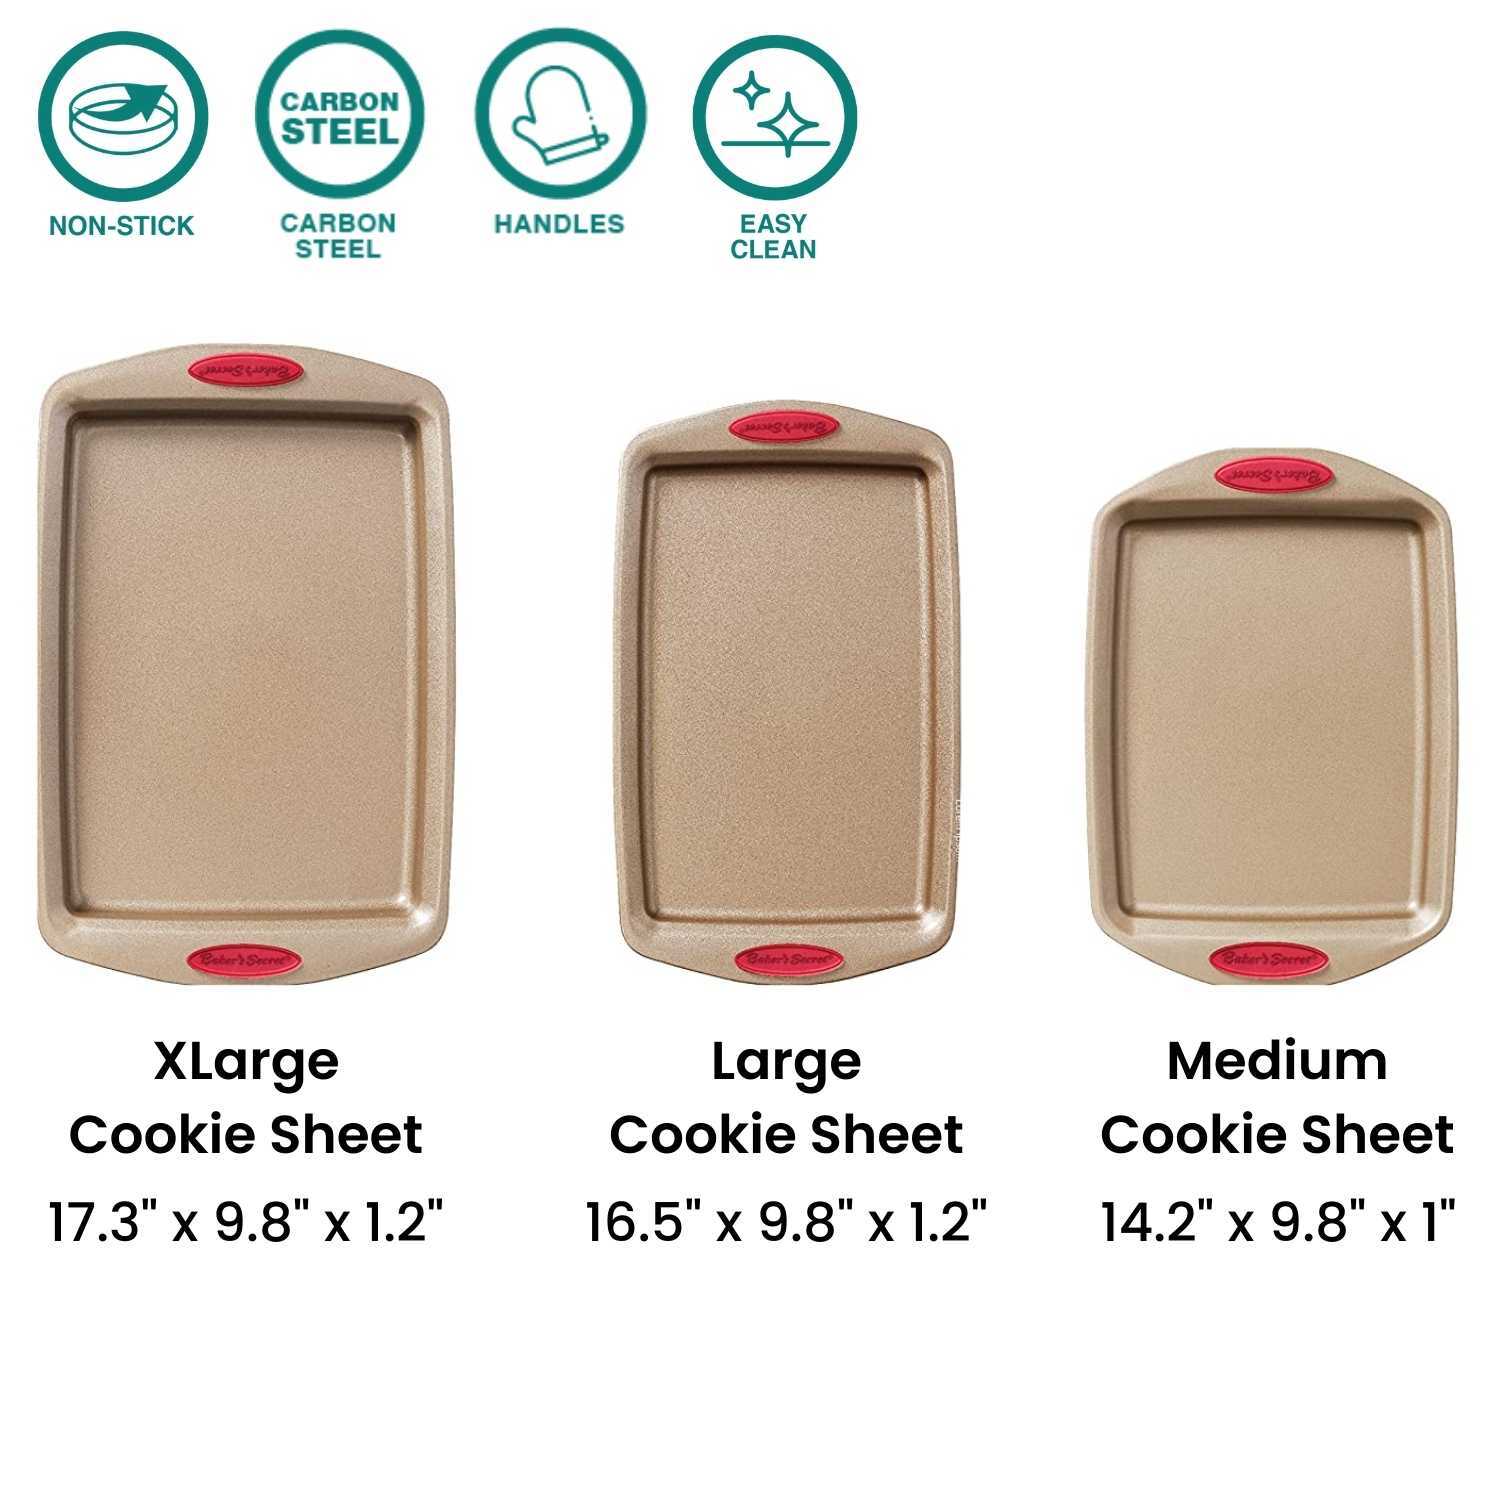 Baker's Secret Cookie Sheets Set 3pcs - Easy Grip Collection Gold / Light Blue